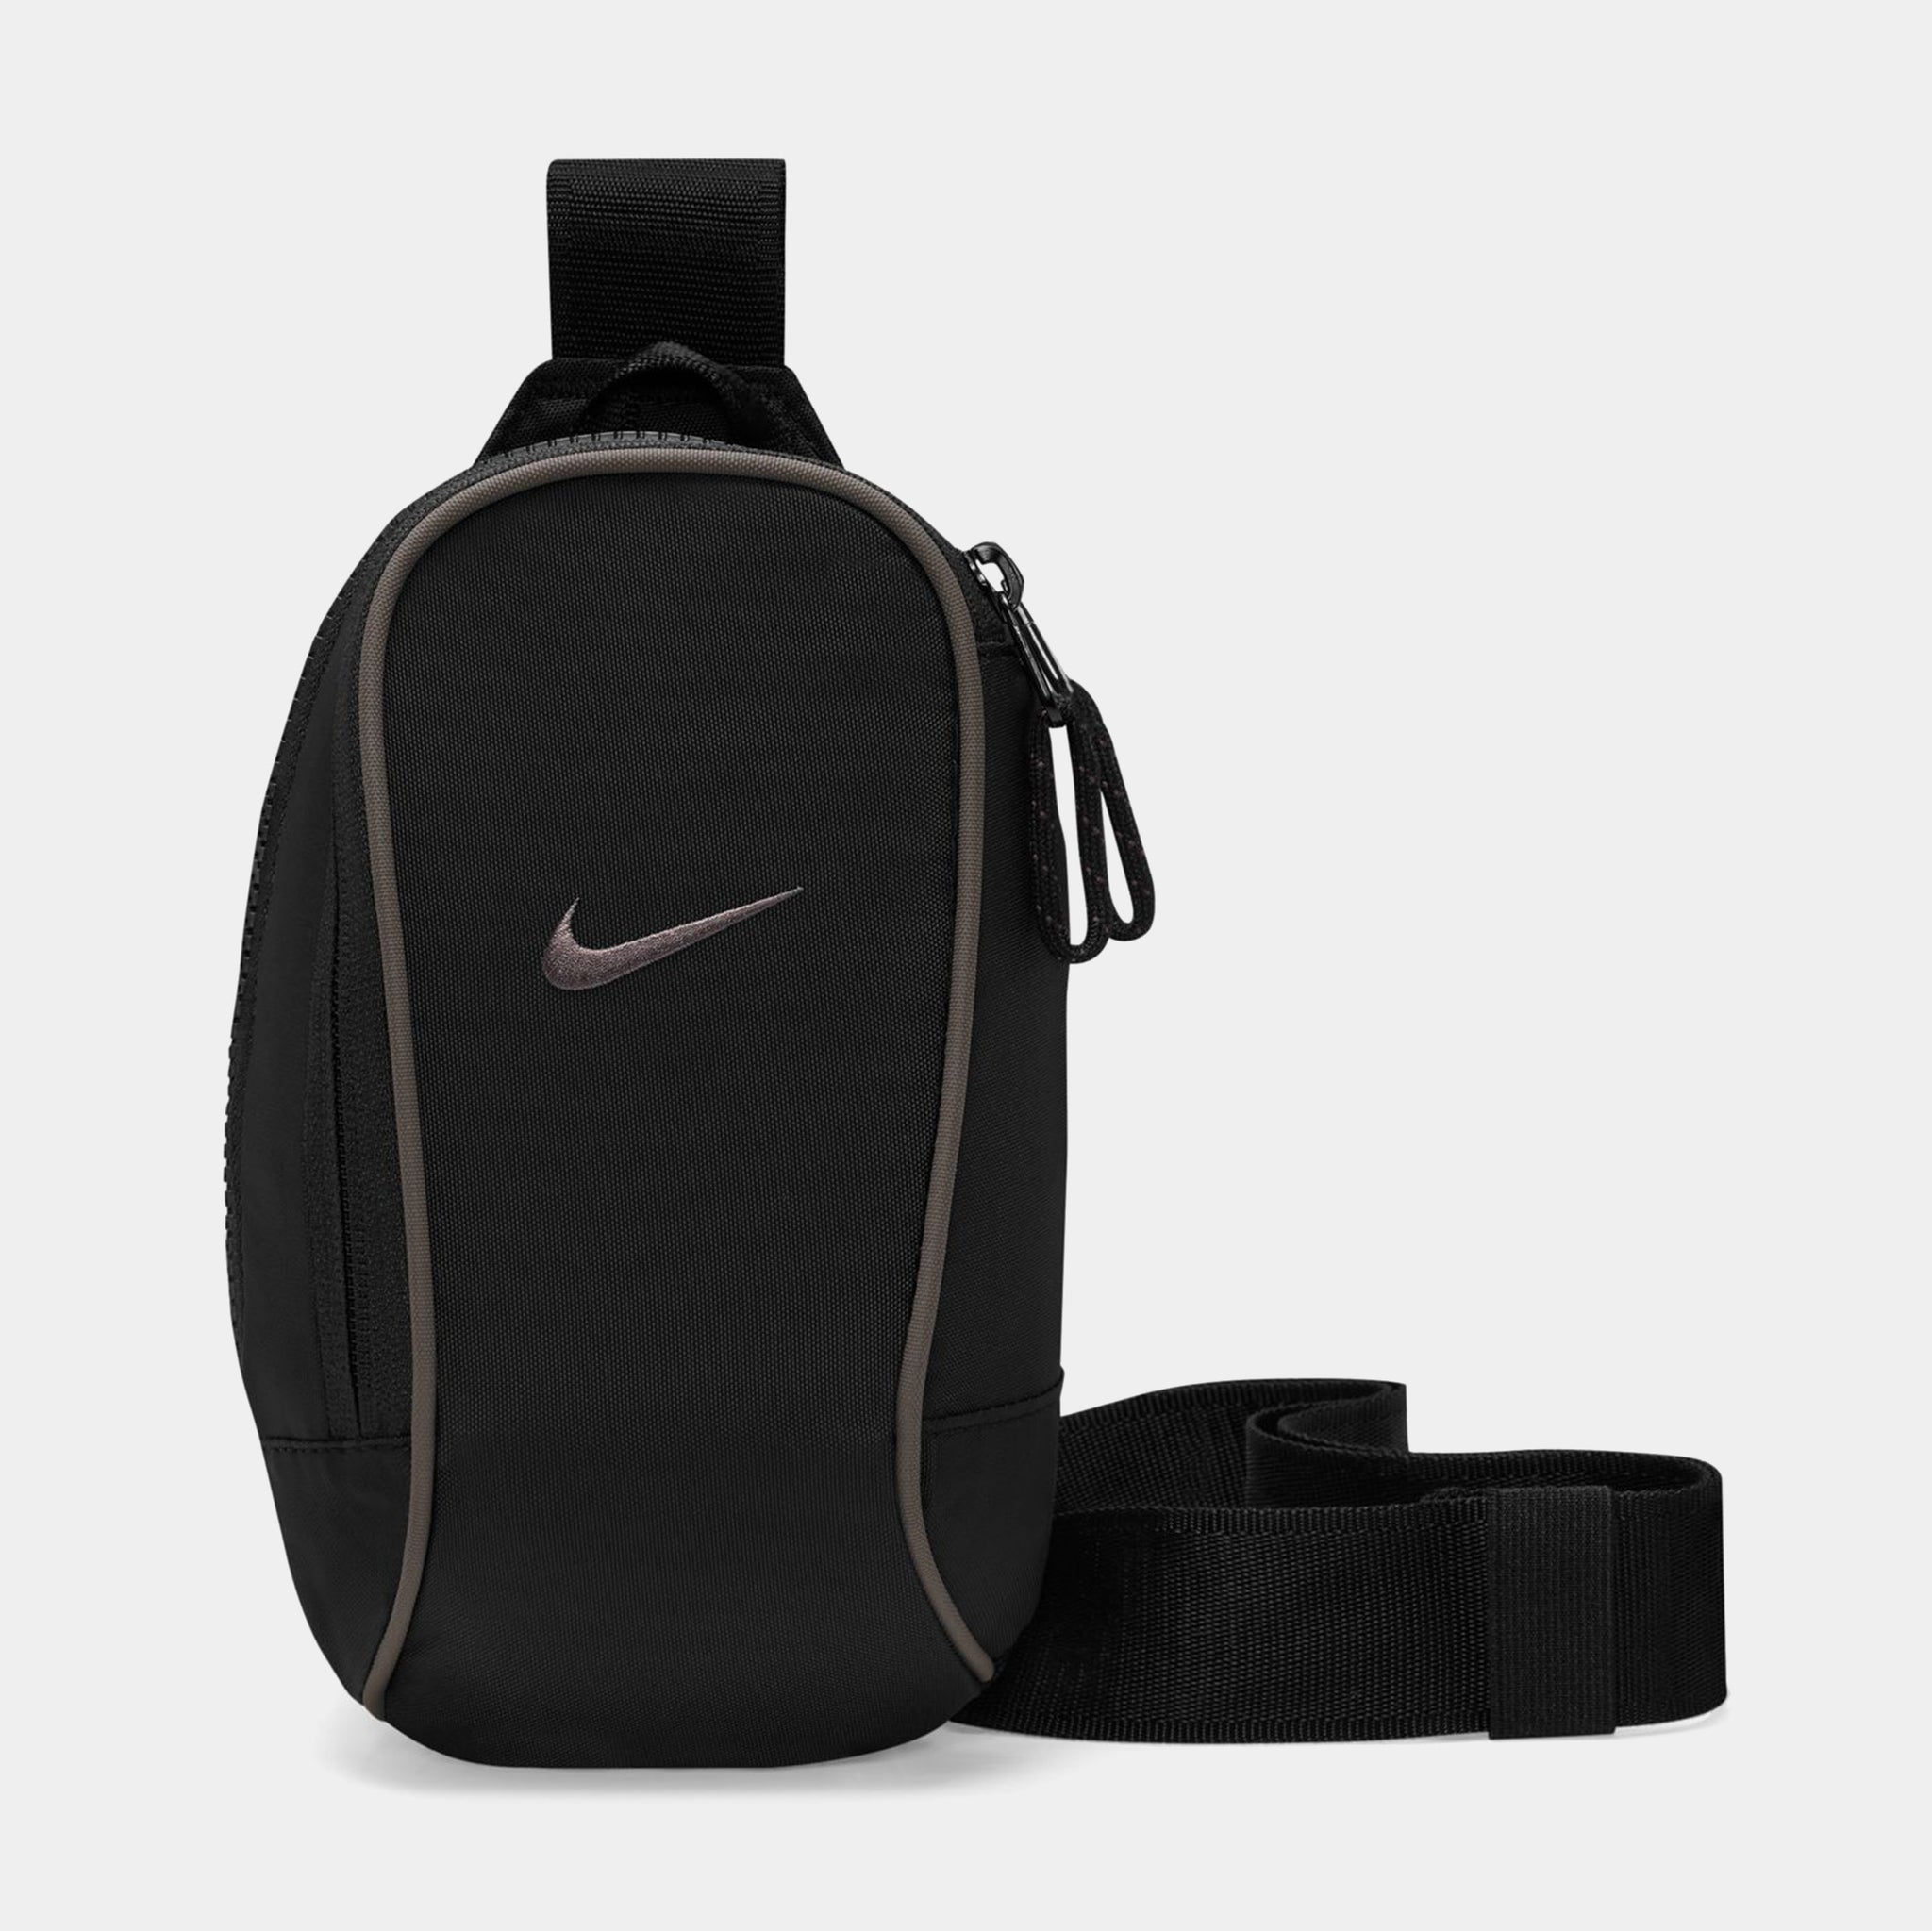 Nike Bags Men Handbags - Buy Nike Bags Men Handbags online in India